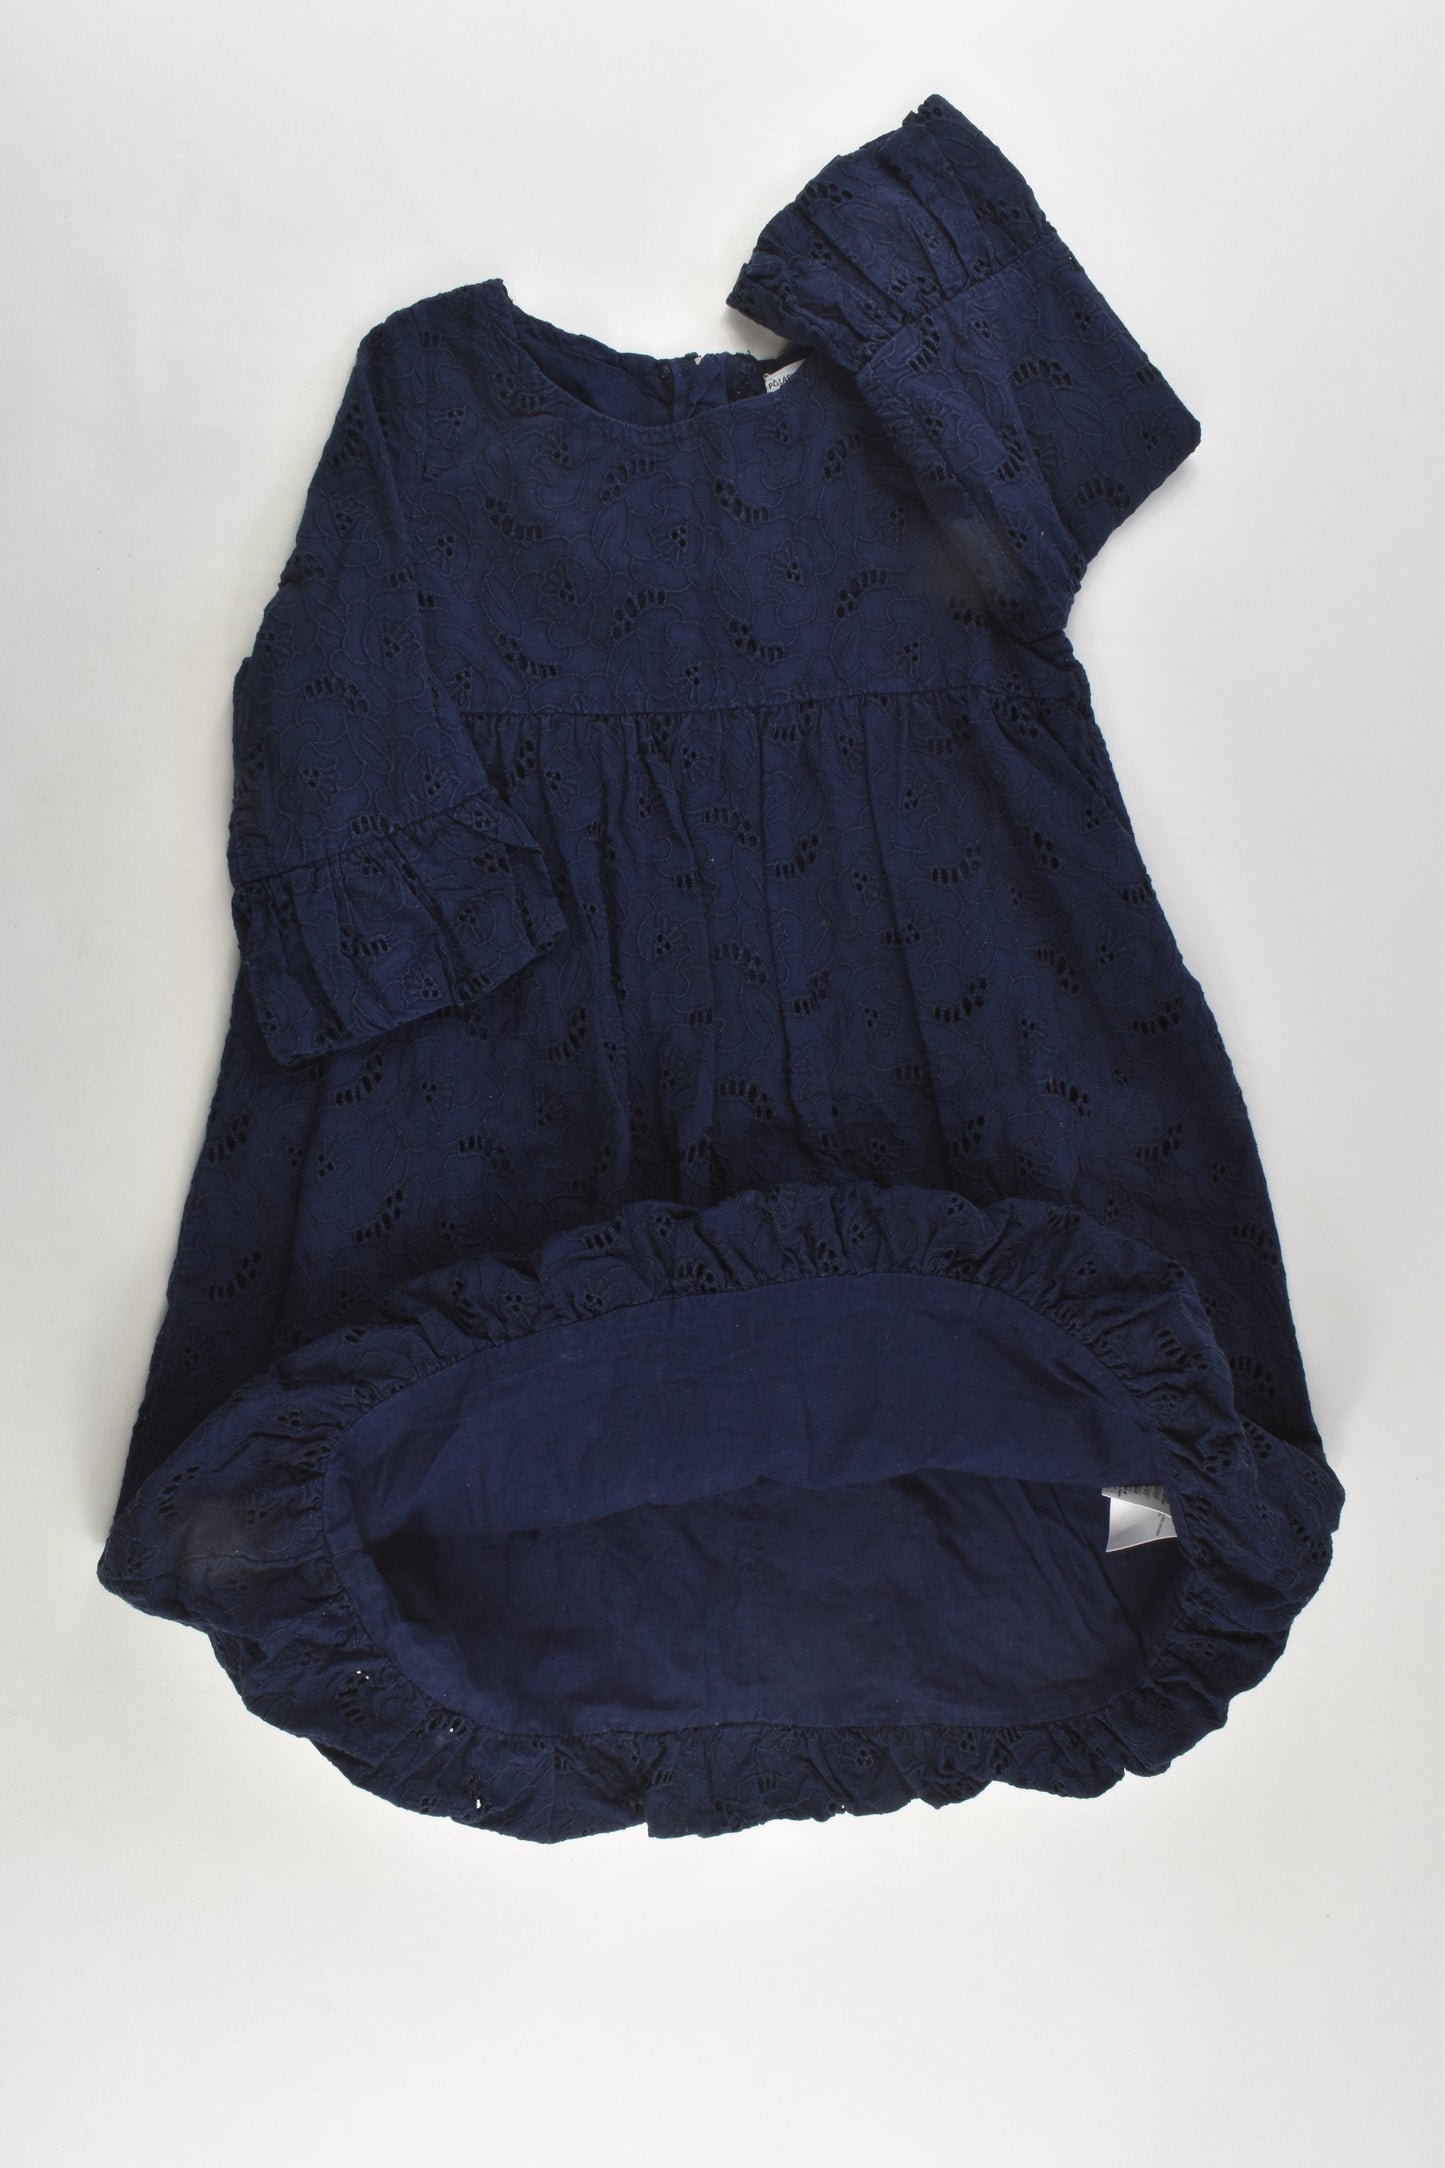 Polarn O. Pyret Size 3-4 (104 cm) Lined Lace Dress